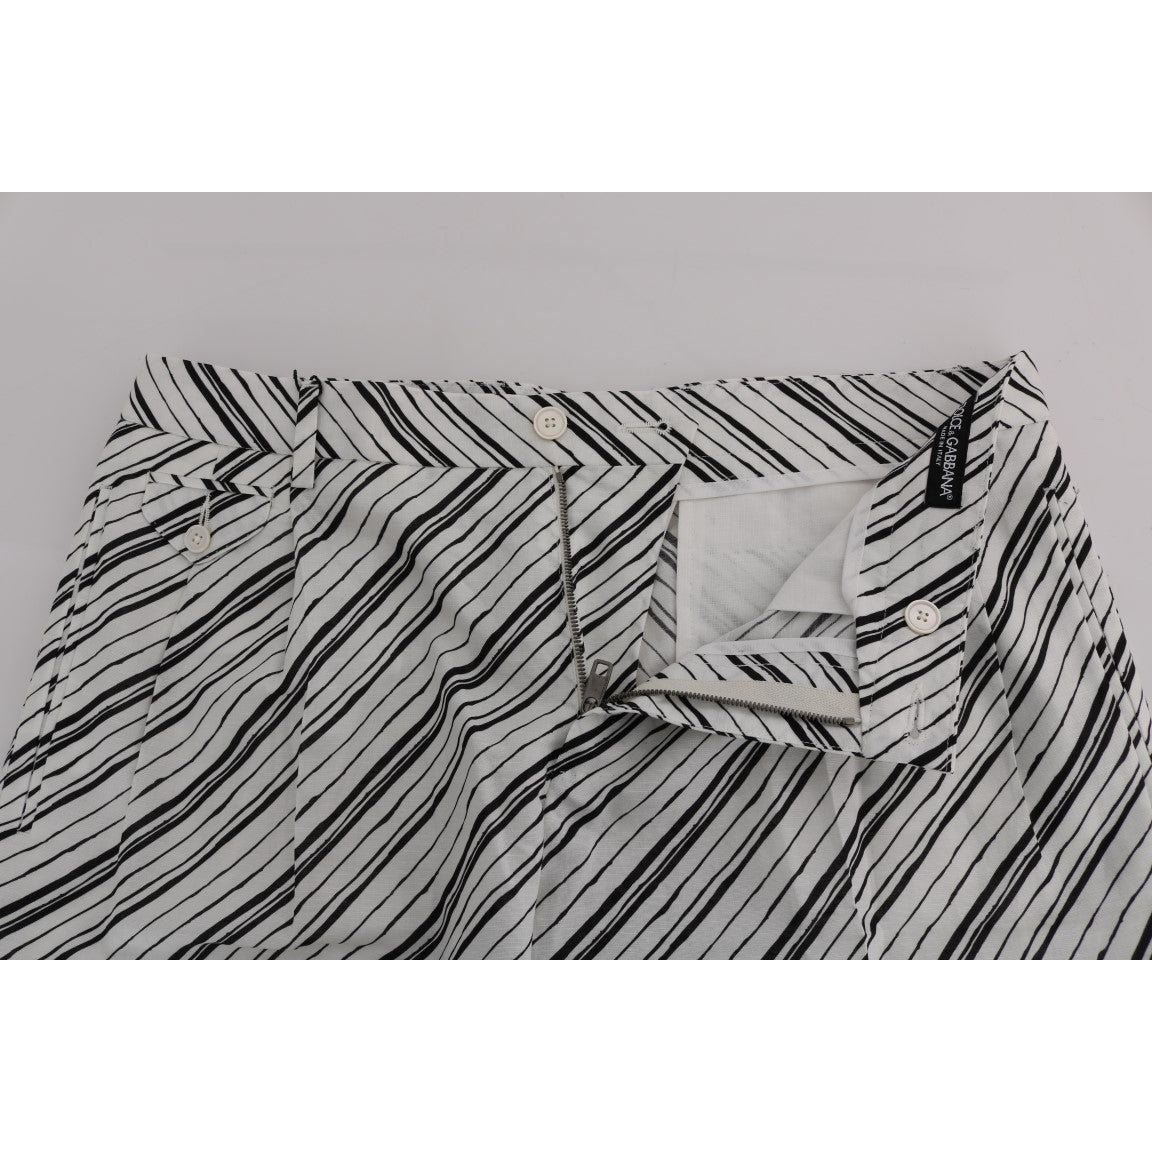 Dolce & Gabbana Elegant Striped Cotton-Linen Shorts white-black-striped-casual-shorts-1 443622-white-black-striped-casual-shorts-2-3.jpg